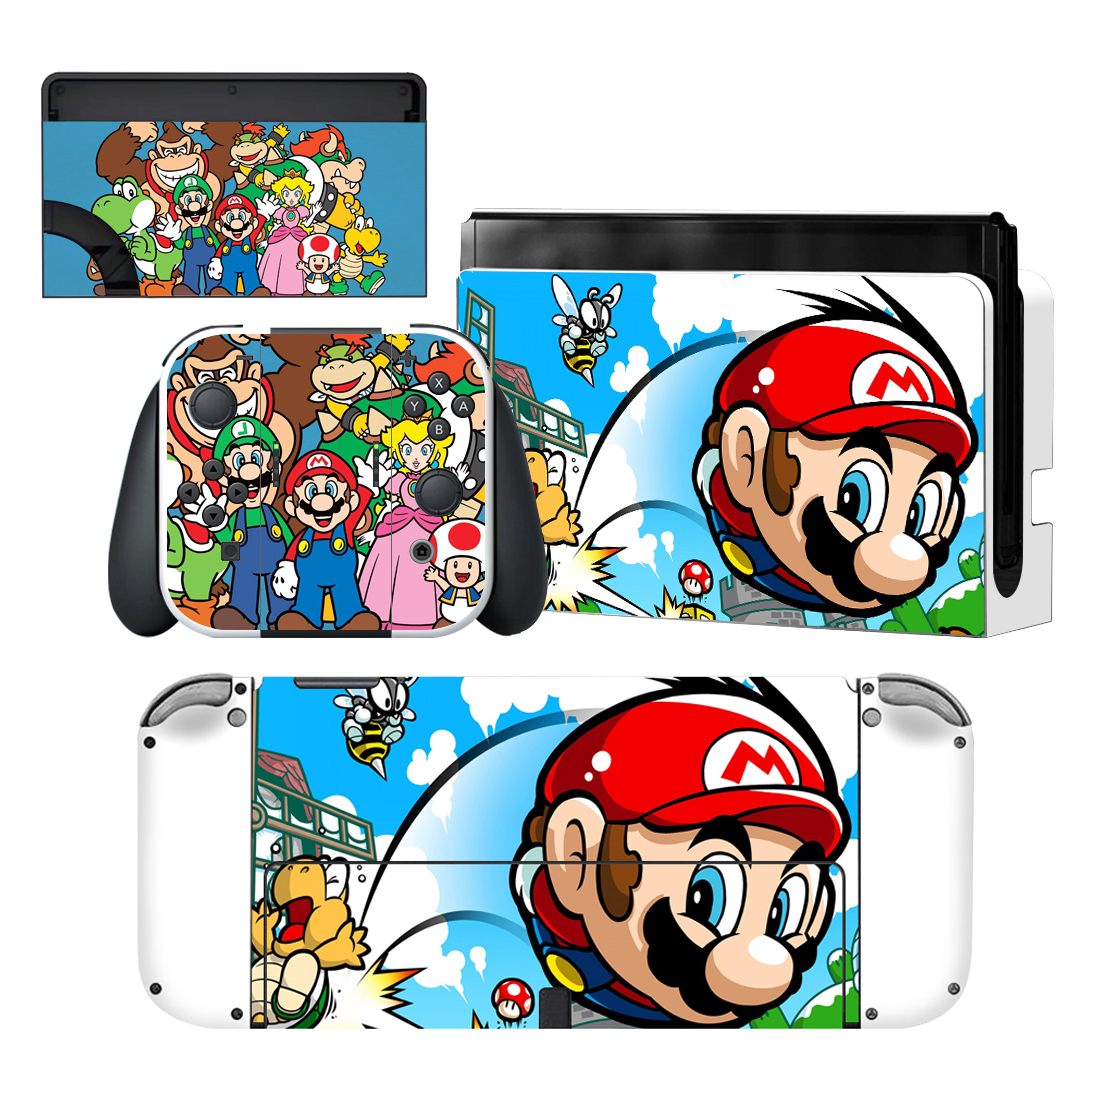 Mario And Luigi Nintendo Switch OLED Skin Sticker Decal